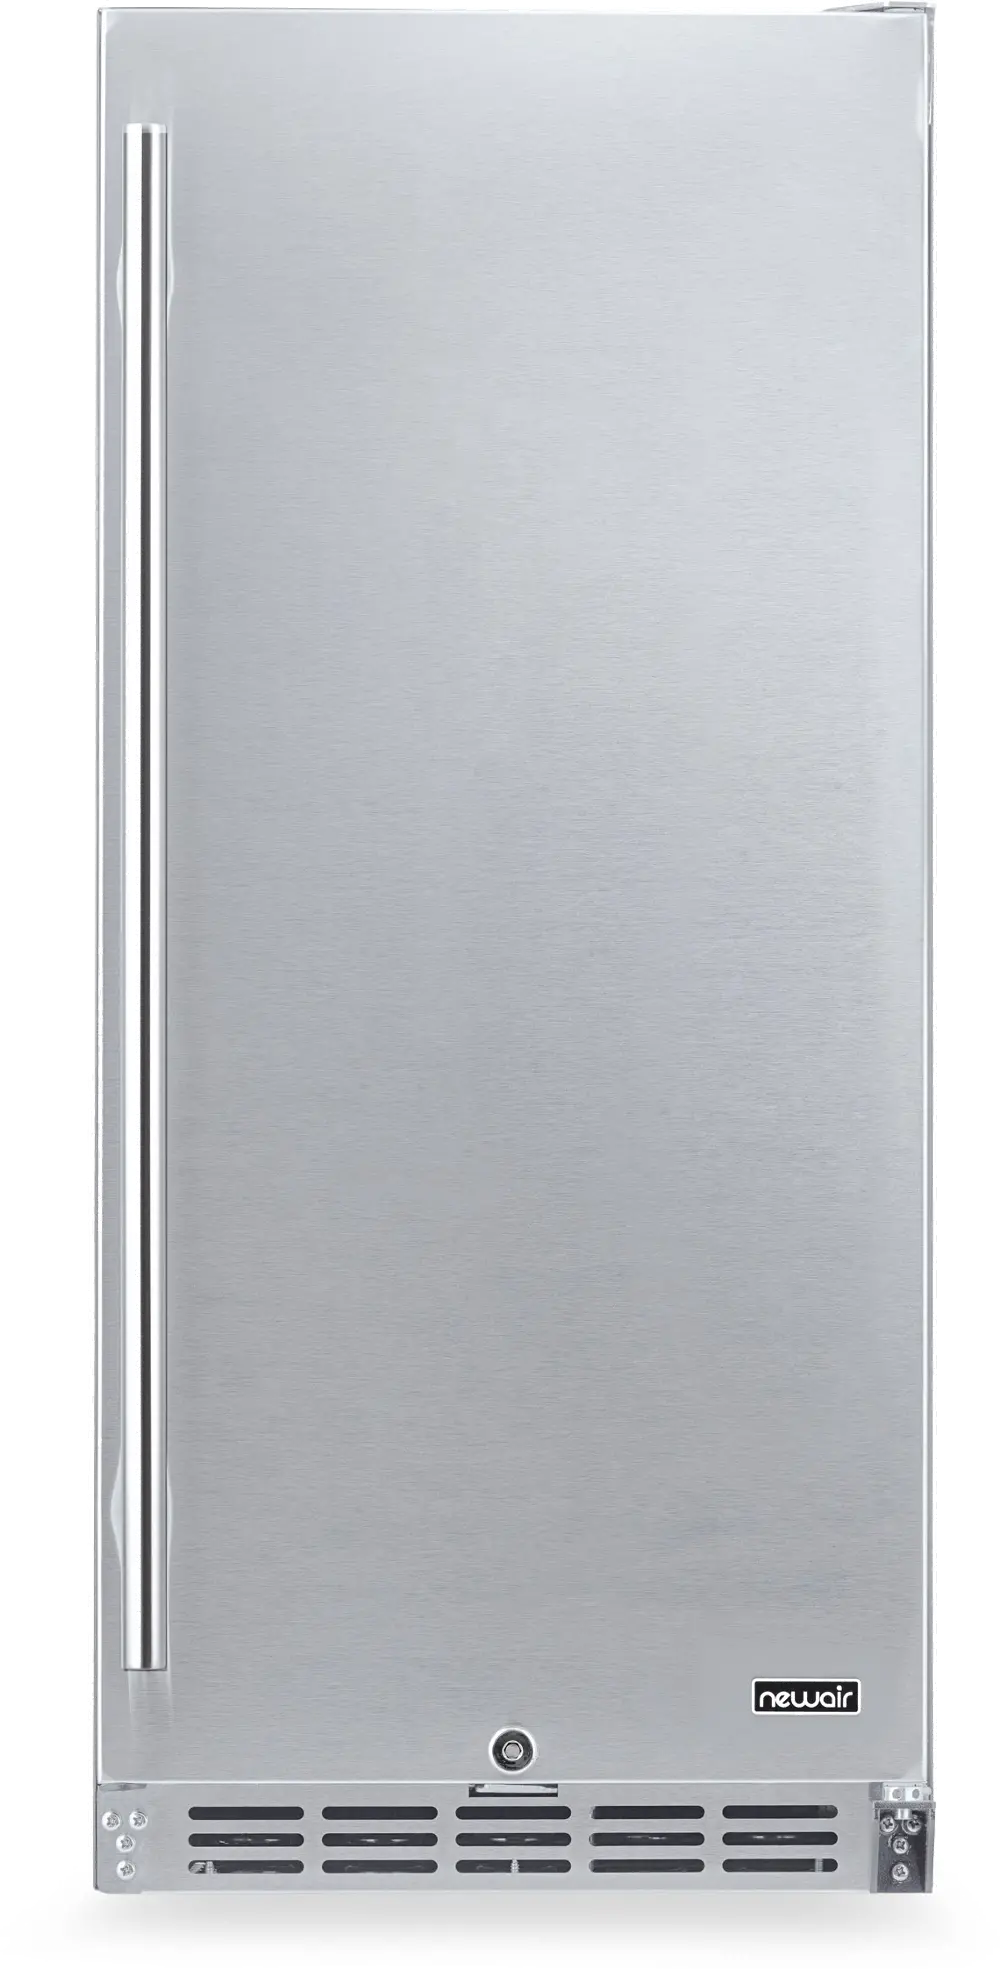 NOF090SS00 NewAir 15 Inch Built In Beverage Mini Refrigerator - 96 Cans, Weatherproof Stainless Steel-1